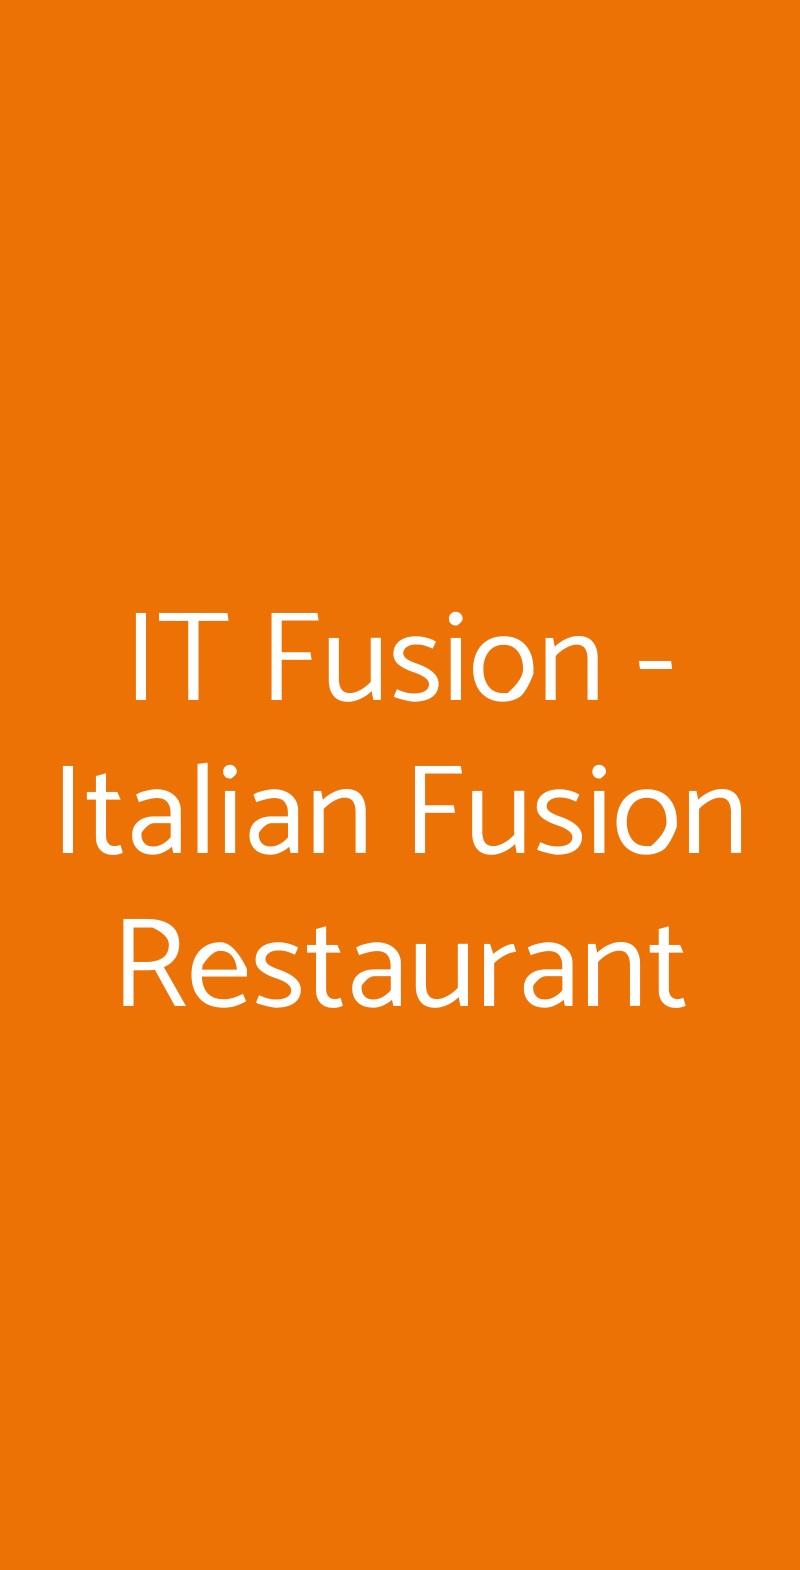 IT Fusion - Italian Fusion Restaurant Genova menù 1 pagina